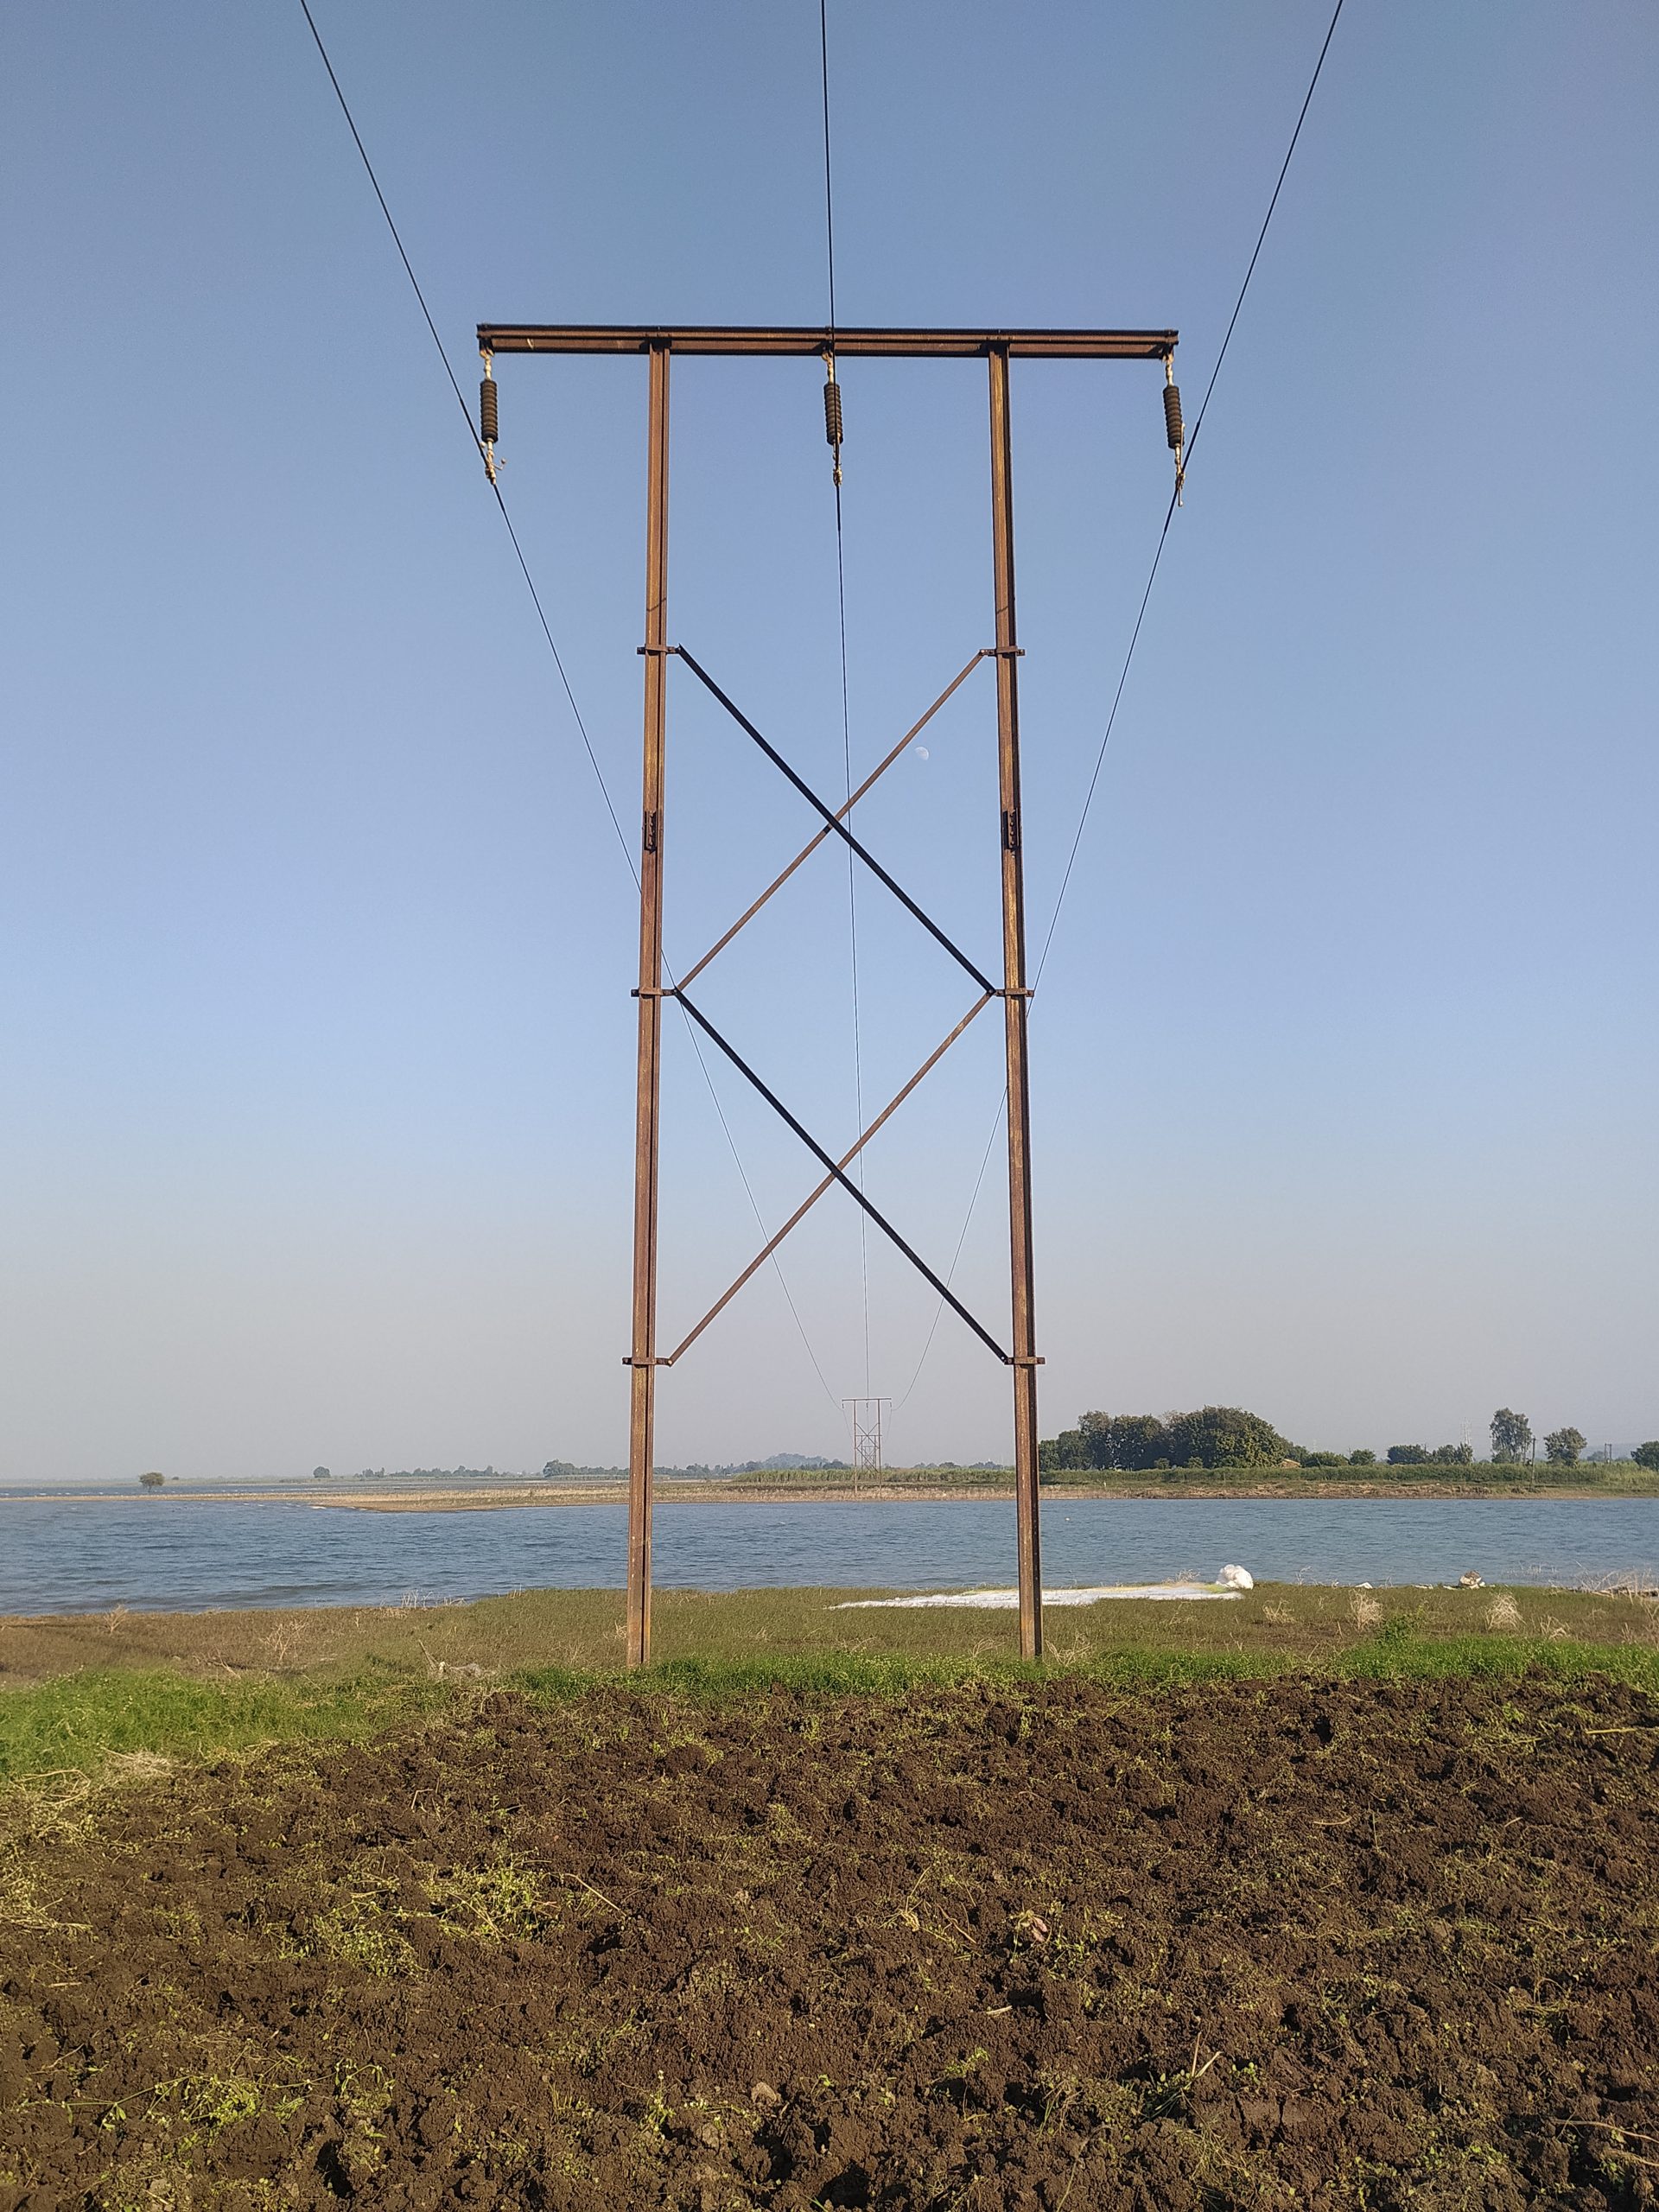 An electric pole